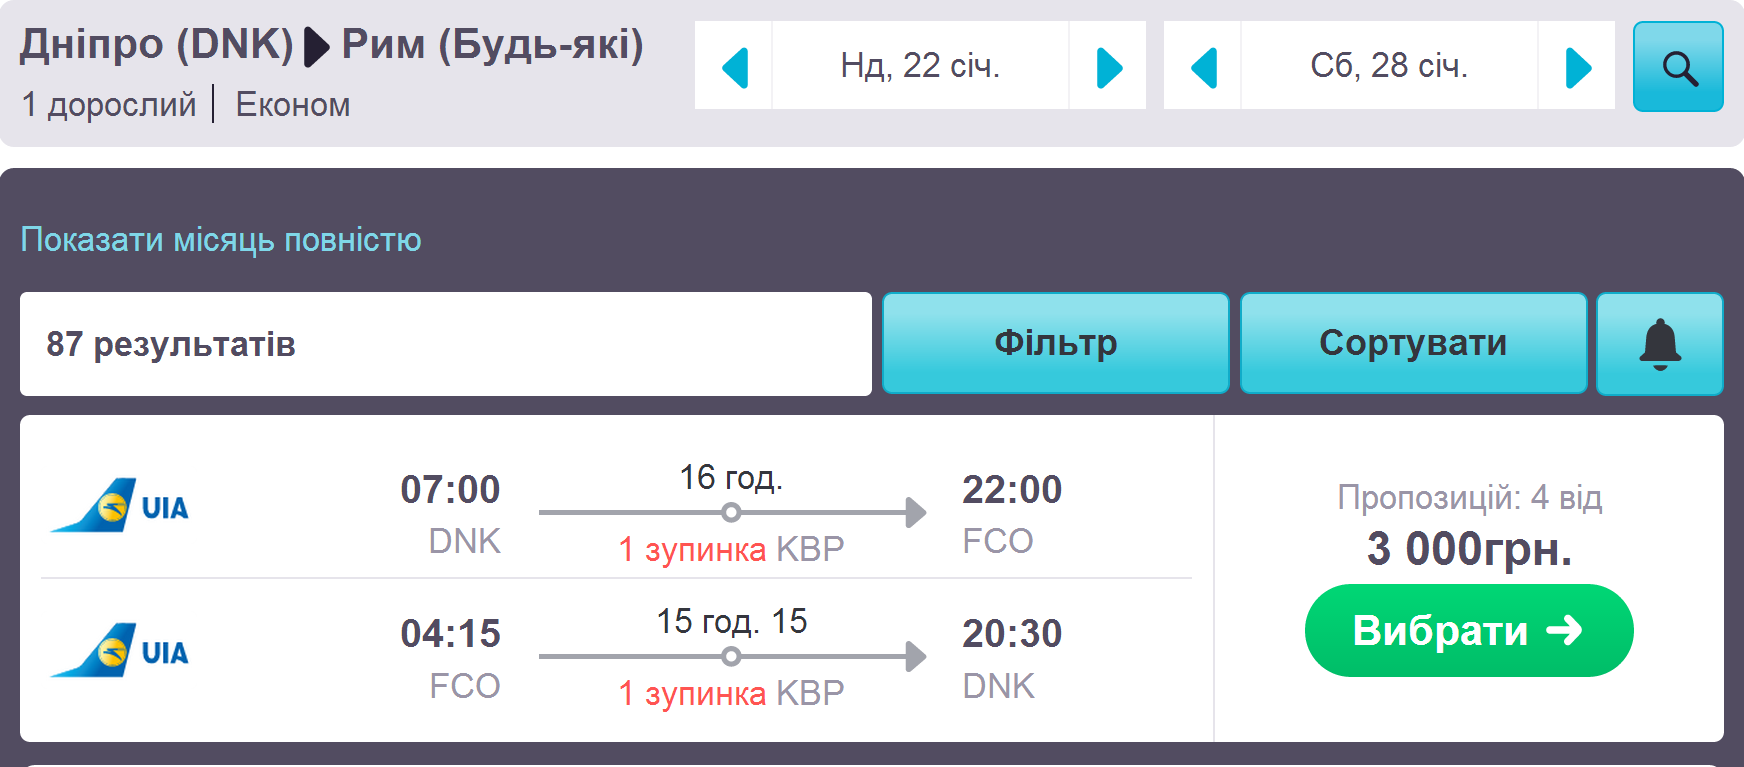 Авиабилеты краснодар тбилиси прямой билеты на самолет питер москва дешево